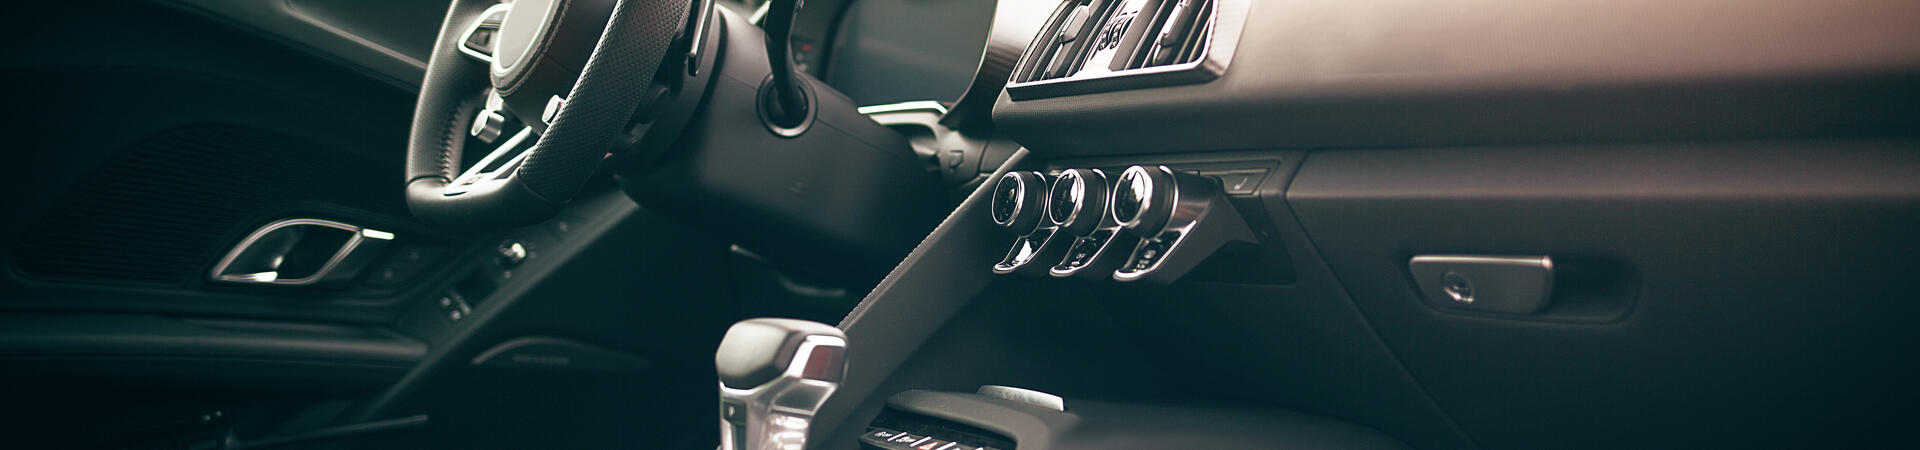 Symbolbild: Abgasskandal bei Audi